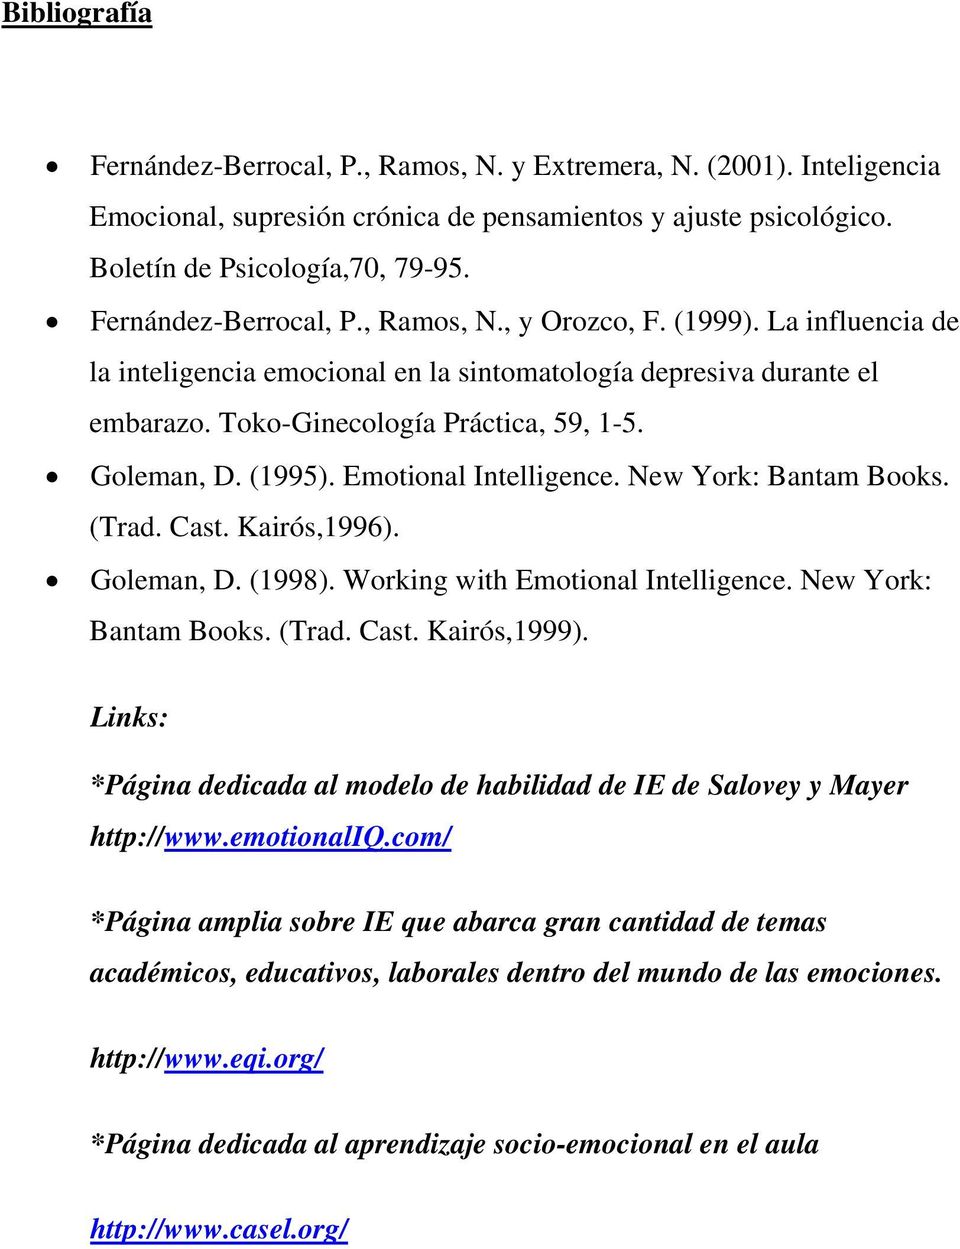 (1995). Emotional Intelligence. New York: Bantam Books. (Trad. Cast. Kairós,1996). Goleman, D. (1998). Working with Emotional Intelligence. New York: Bantam Books. (Trad. Cast. Kairós,1999).